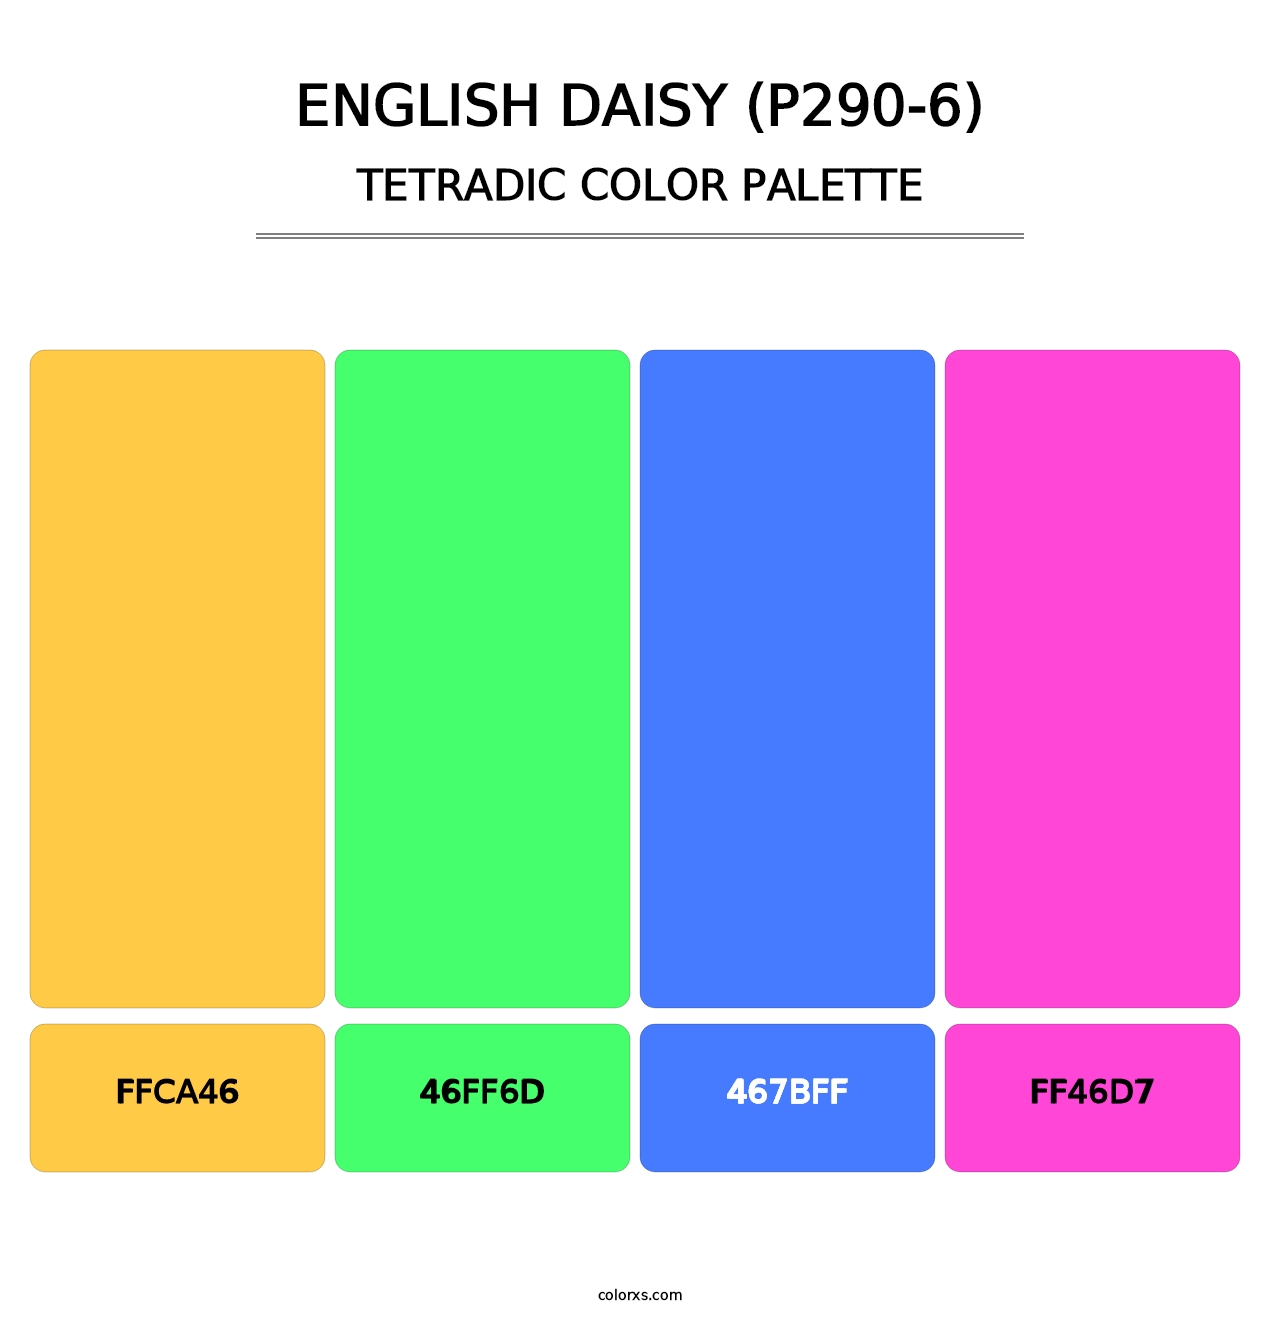 English Daisy (P290-6) - Tetradic Color Palette